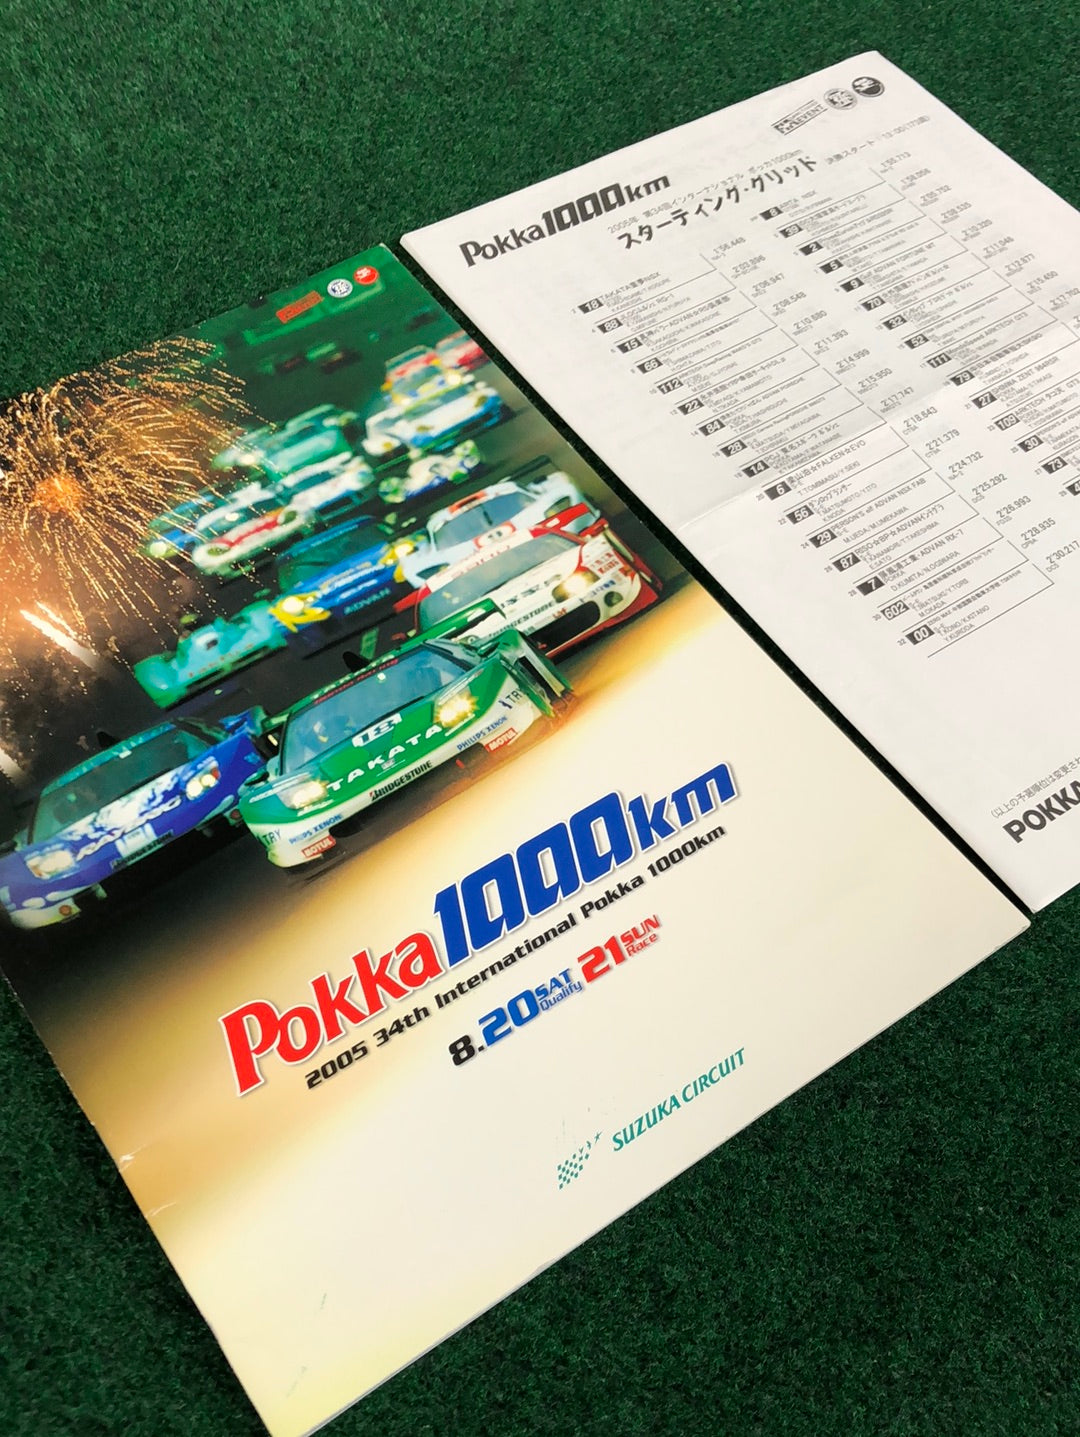 2005 POKKA 1000km Suzuka Circuit Official Race Program